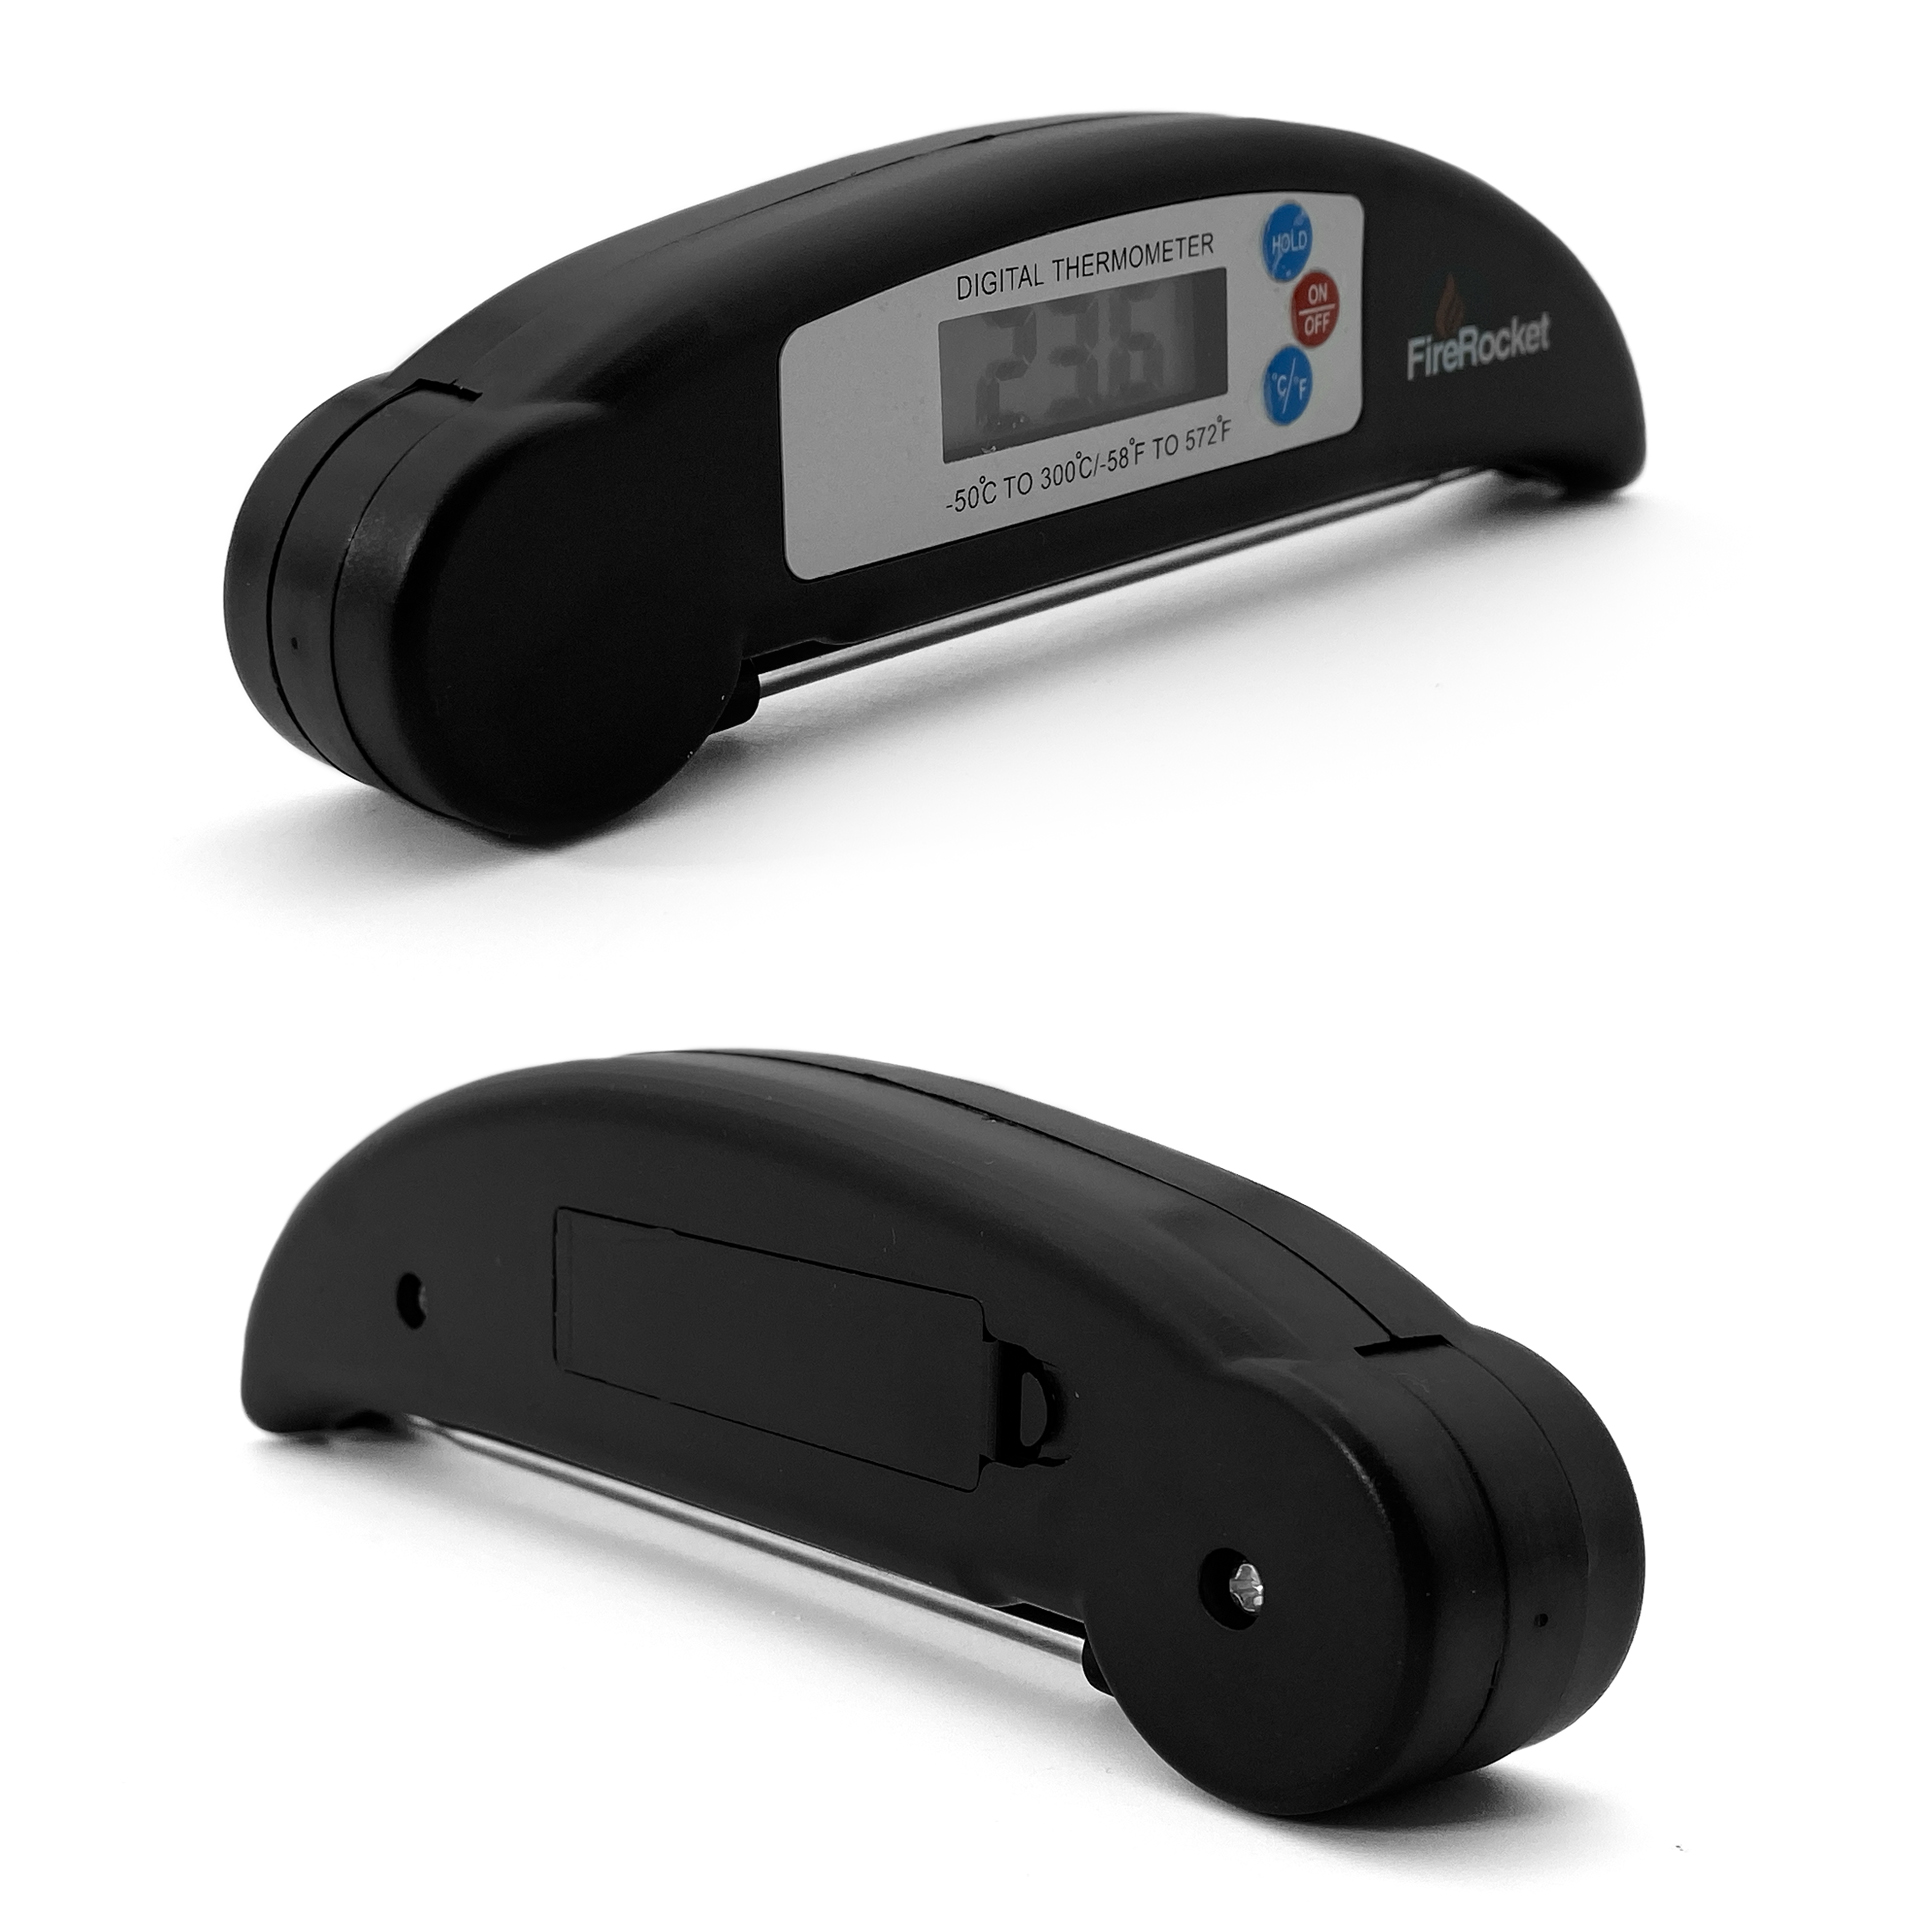 FireRocket BBQ Thermometer klappbar digitales Grillthermometer